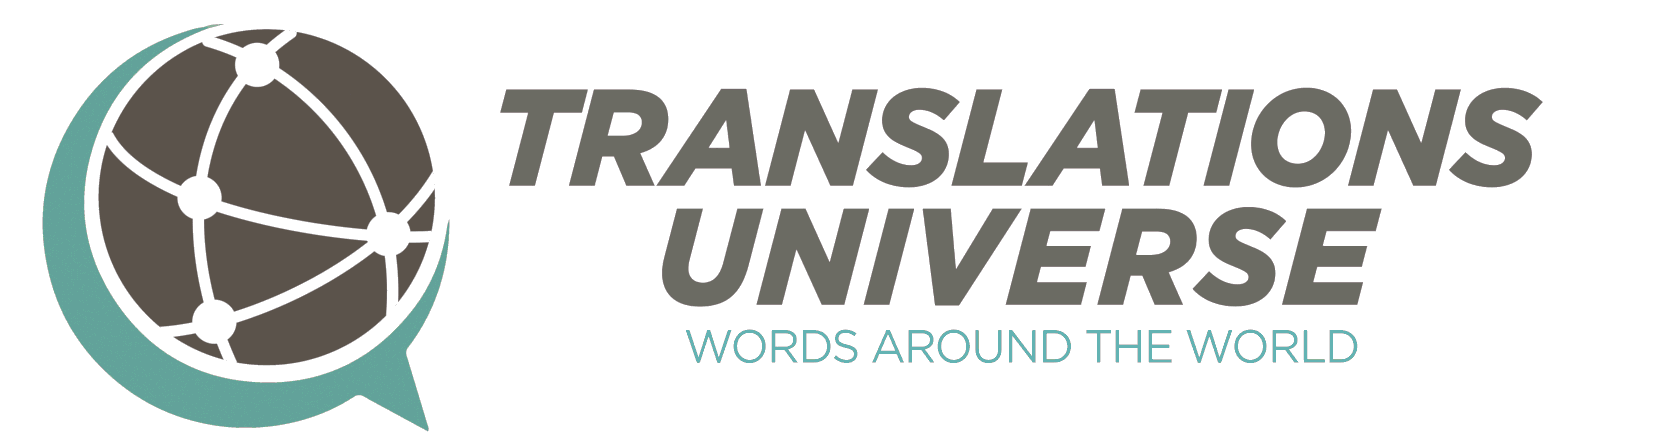 Professional translations - Translations Universe